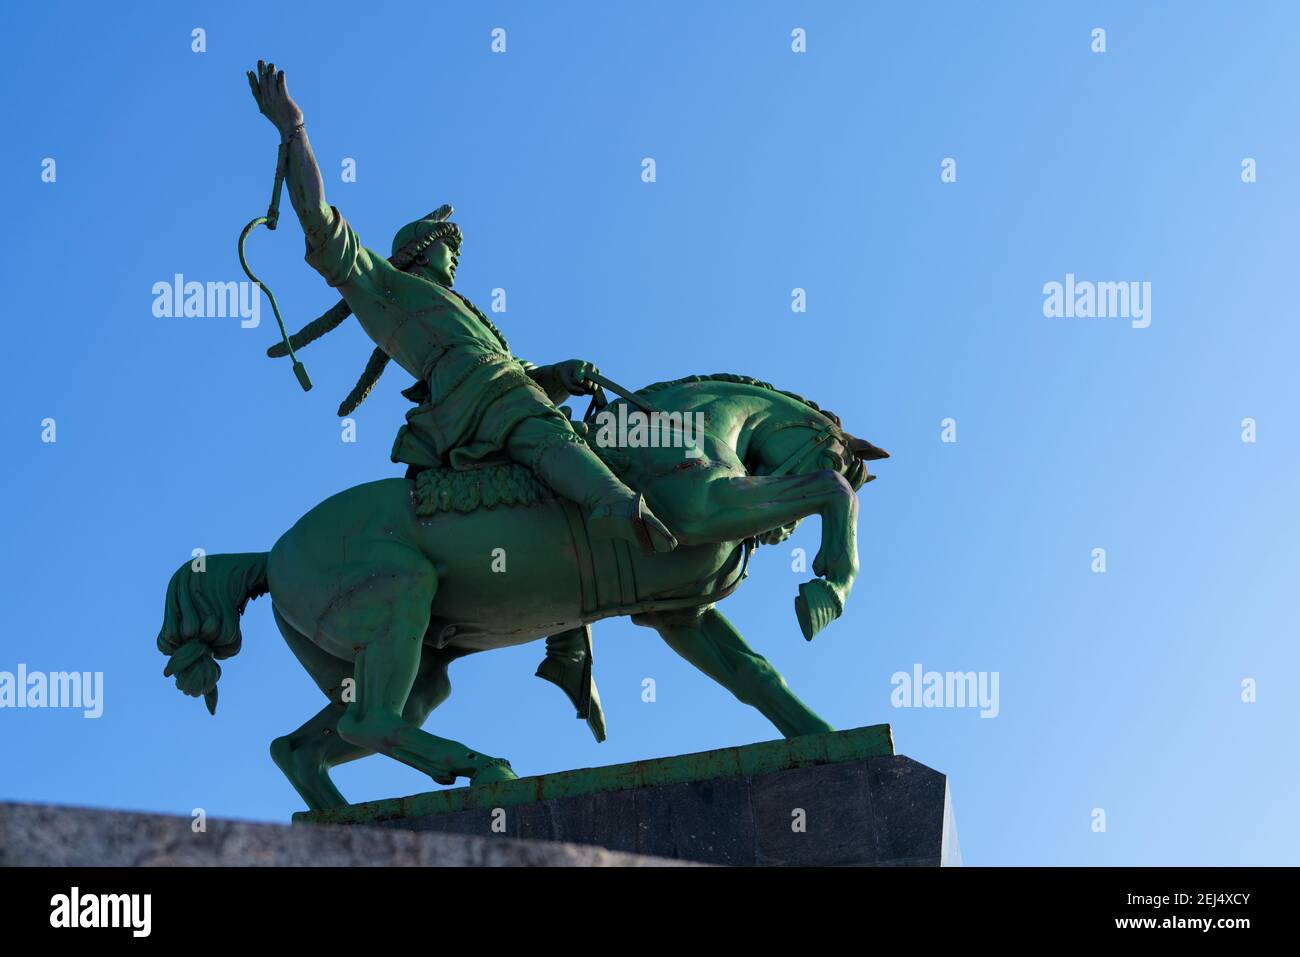 Ufa, Republic of Bashkortostan, Russia - February 15, 2021: Monument to the national hero of Bashkortostan Salavat Yulaev. Member of the Peasant War o Stock Photo